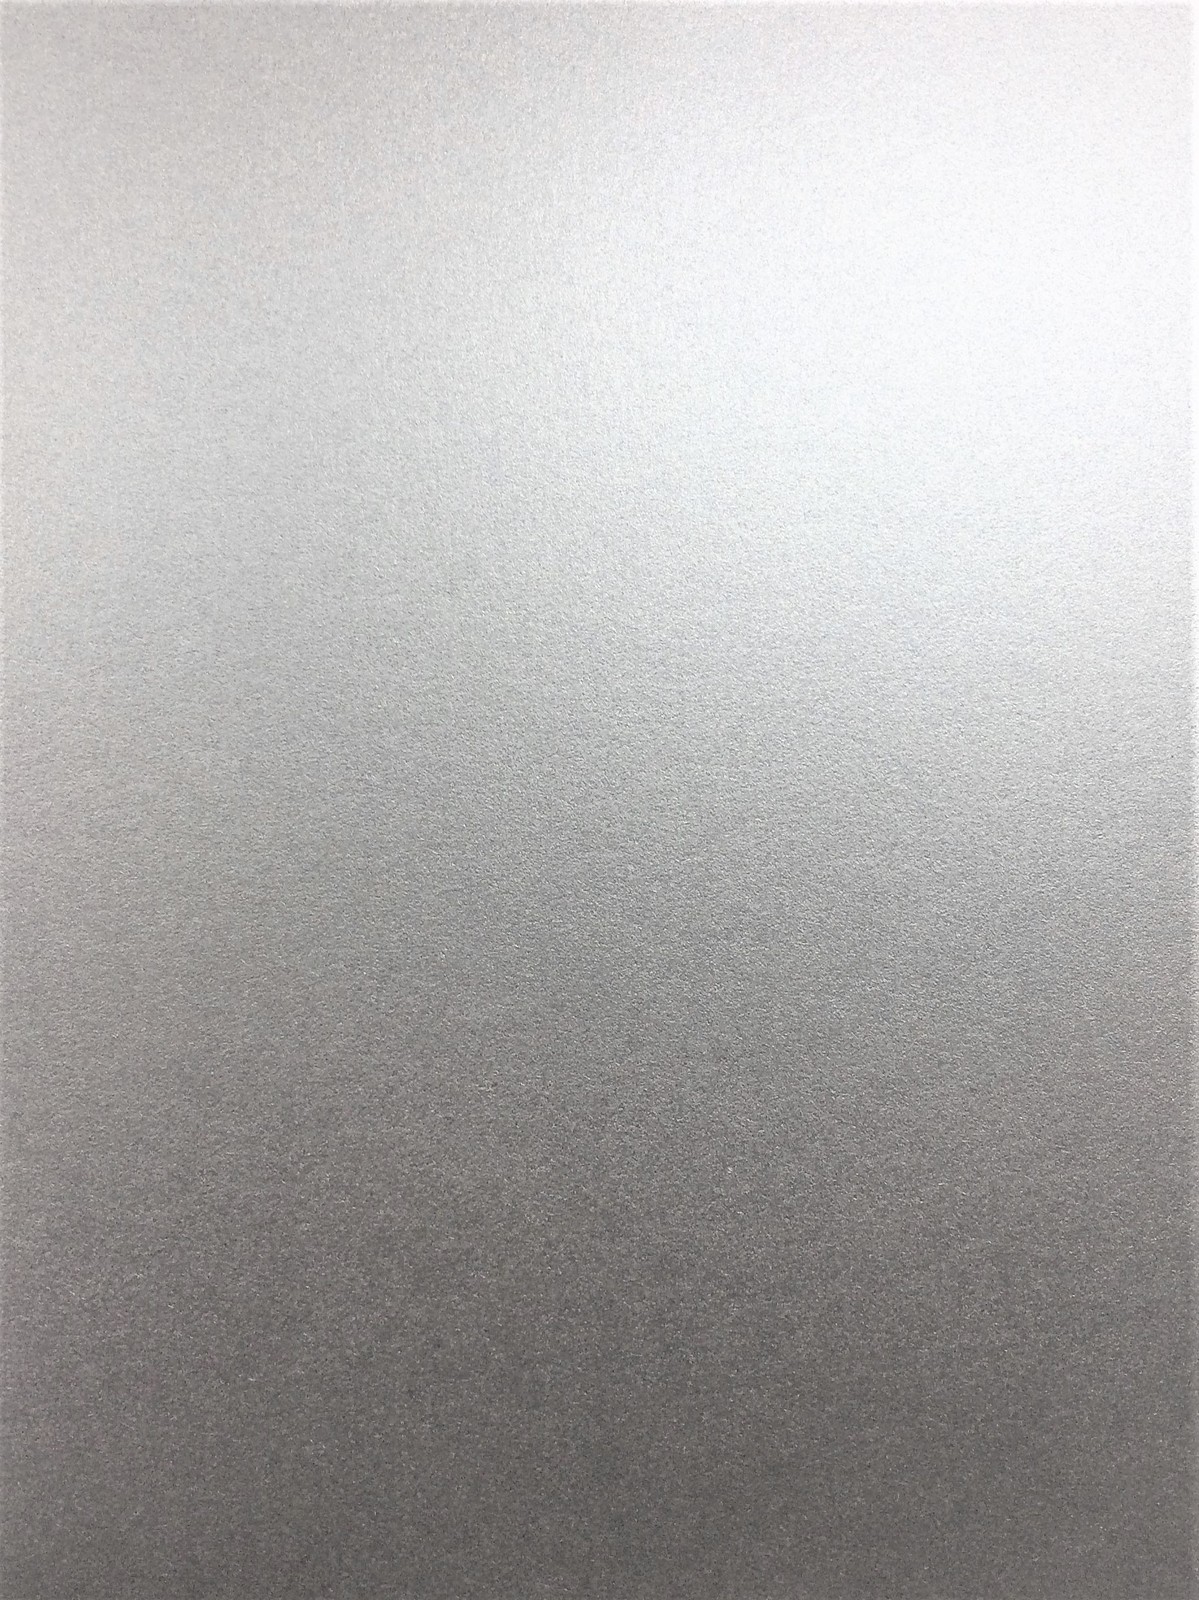 Stardream Silver Metallic Paper A4 120gsm | Amazing Paper